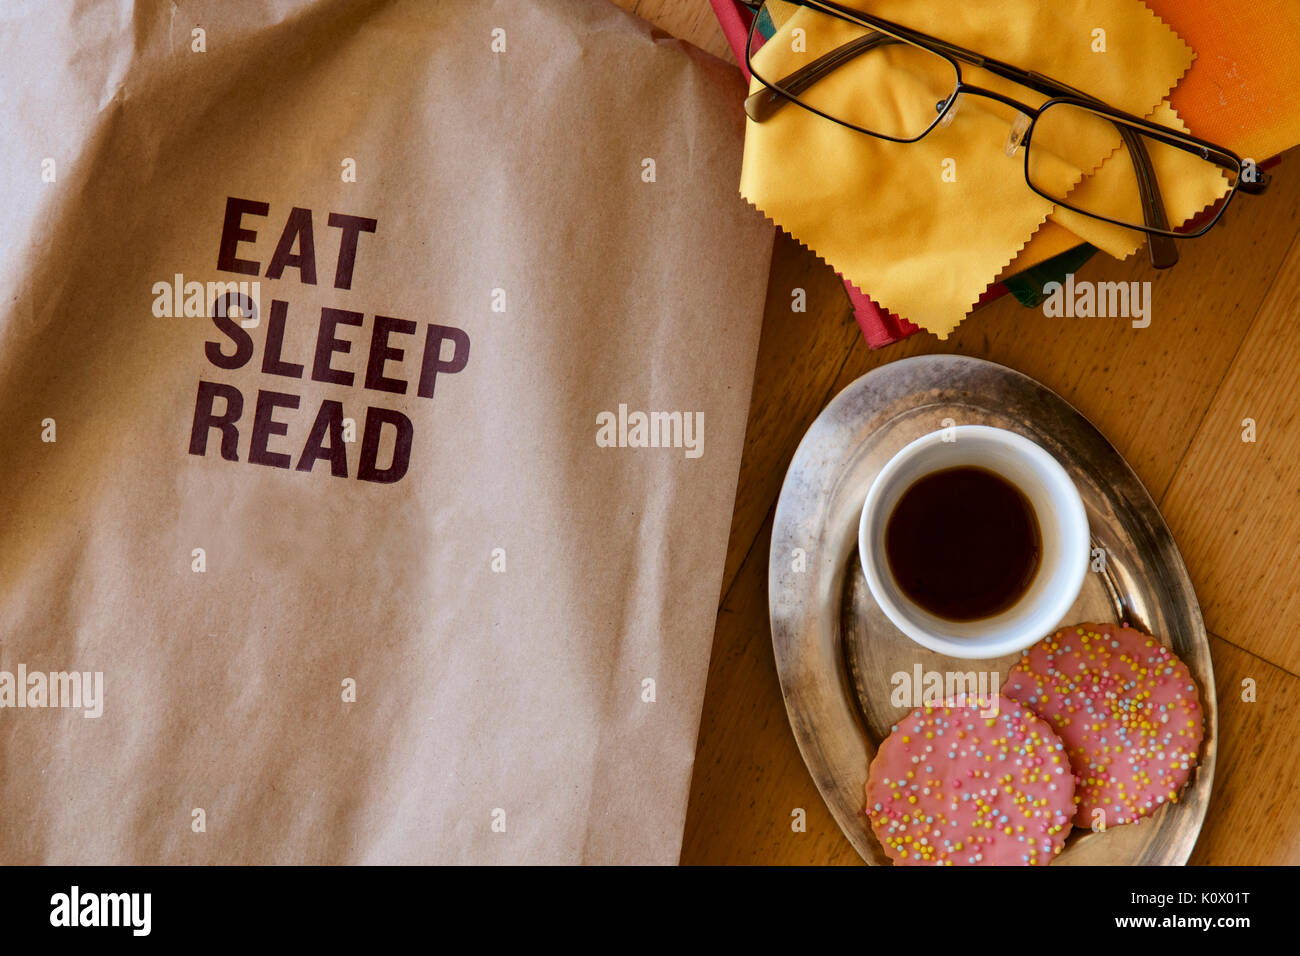 eat-sleep-read-caption-to-encourage-reading-stock-photo-alamy